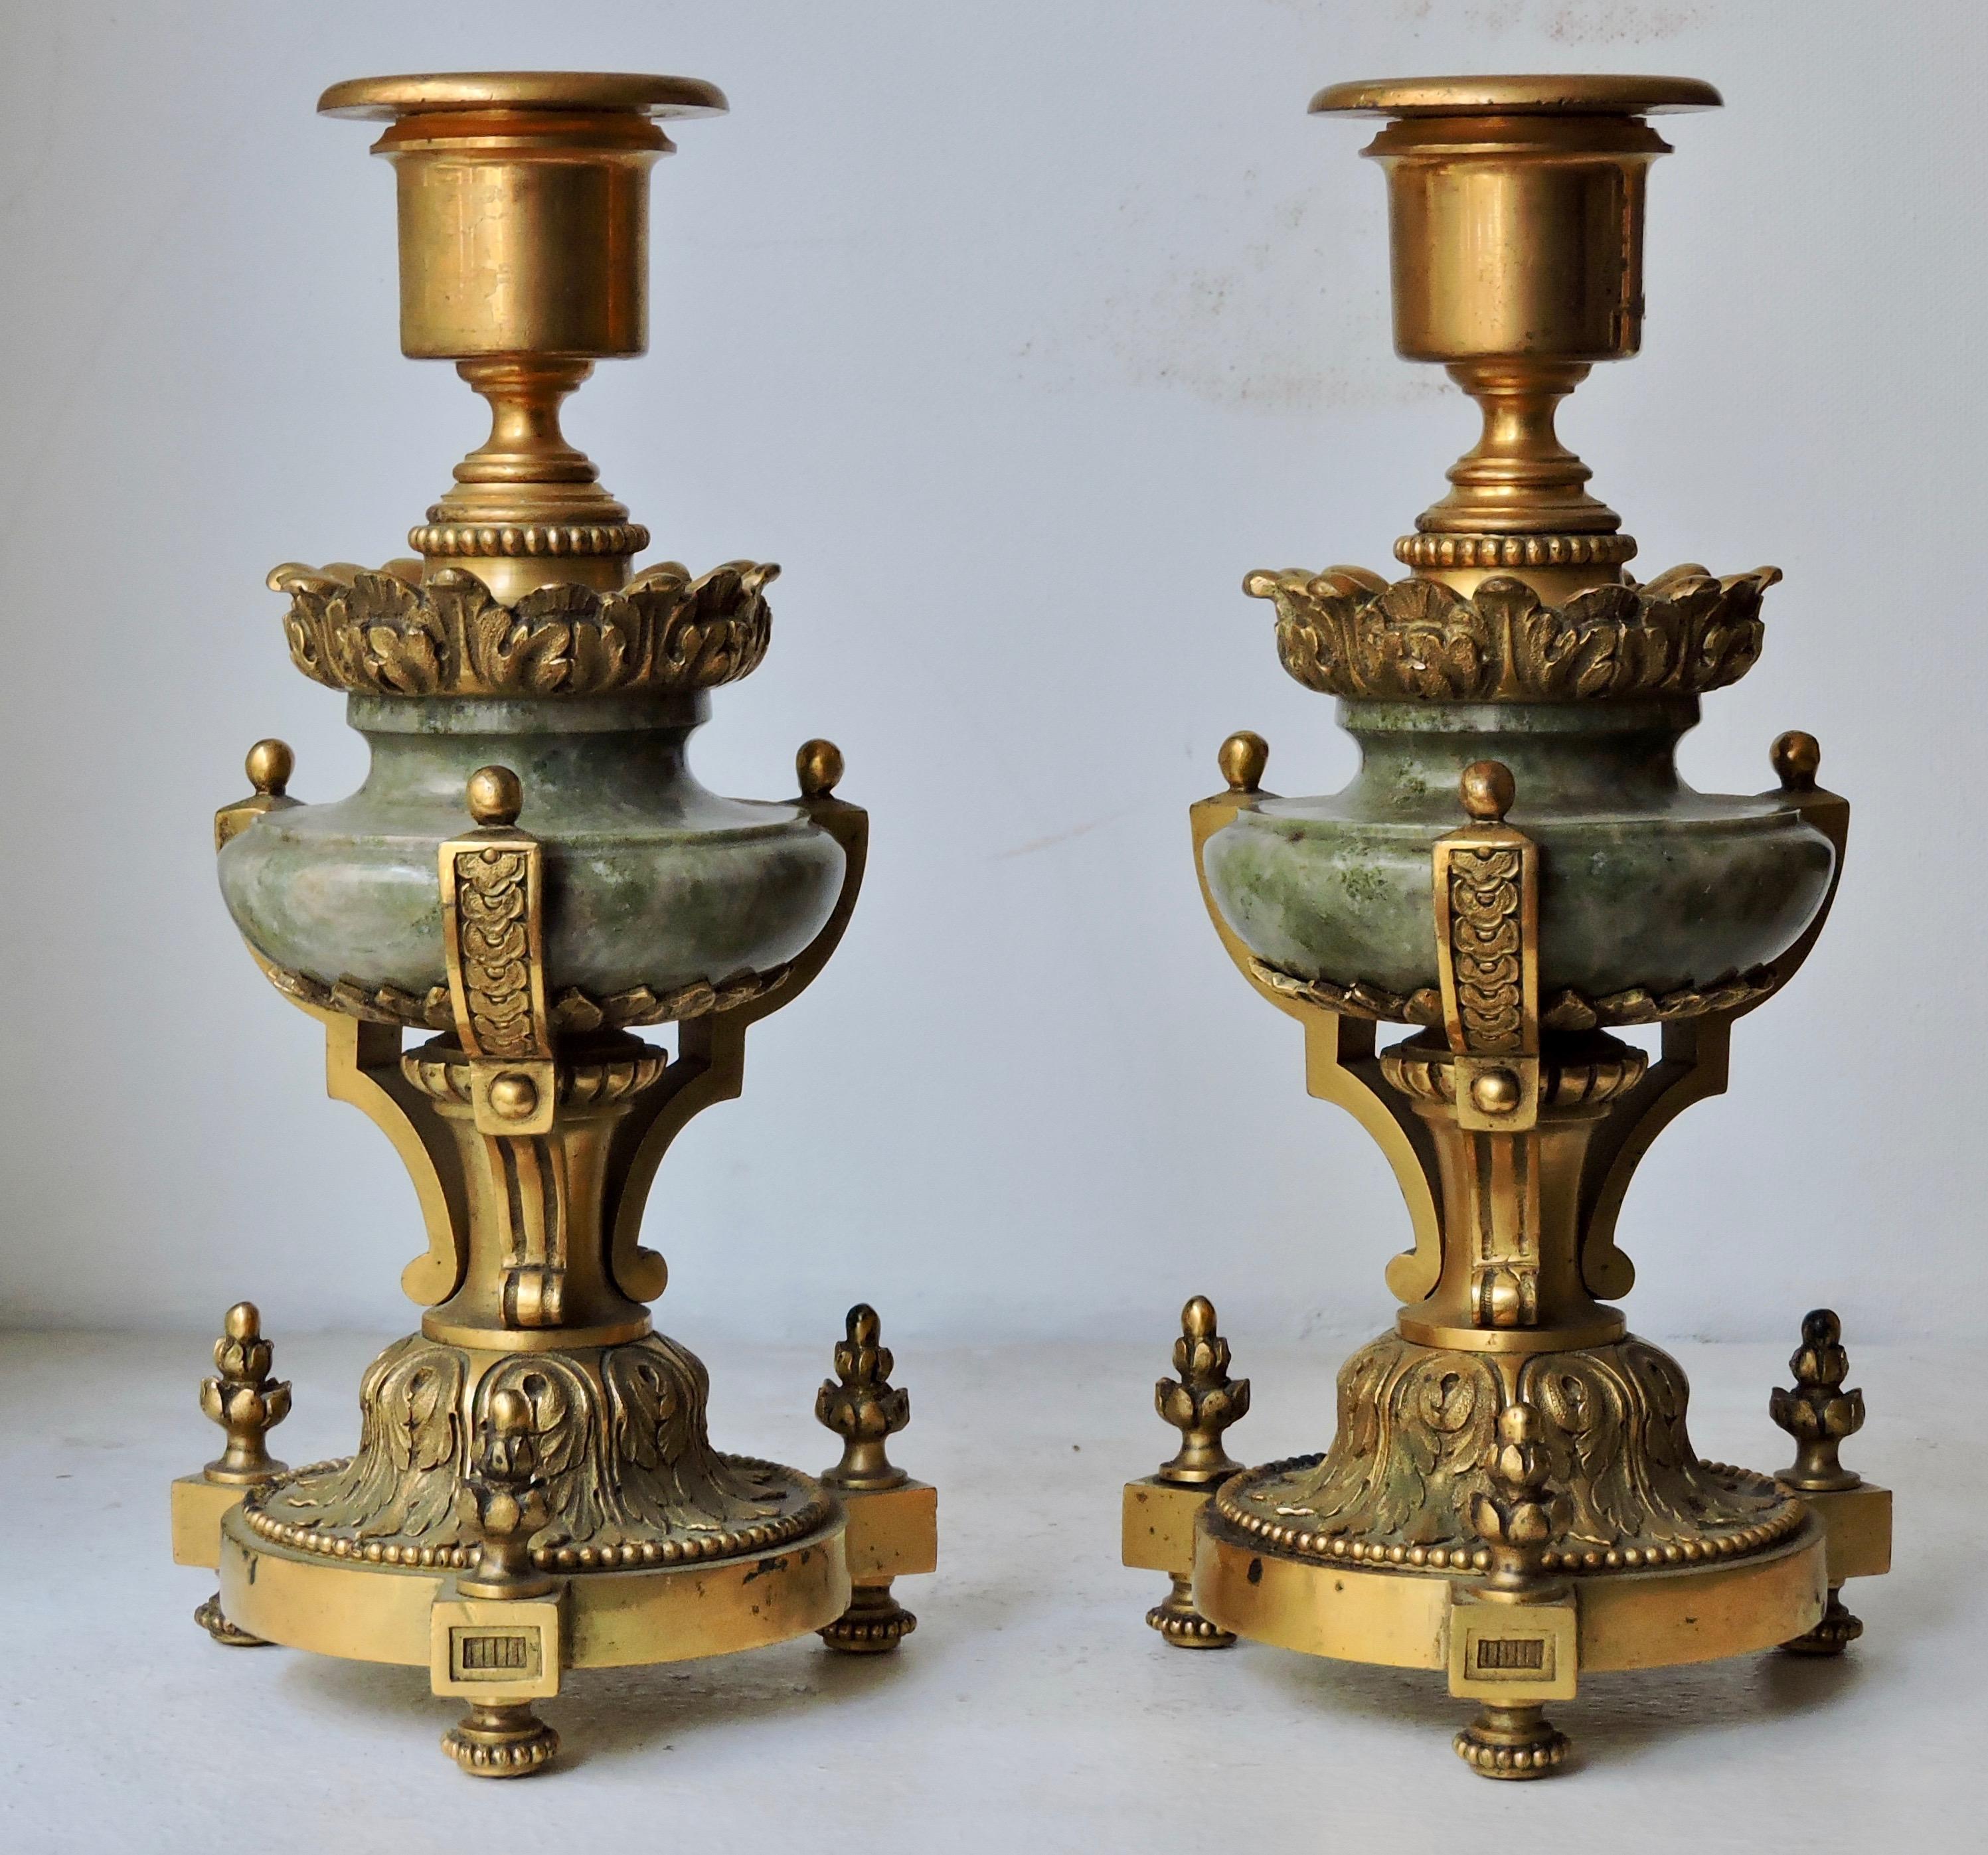 19th century Louis XVI style pair of ormolu and green jasper candlesticks.